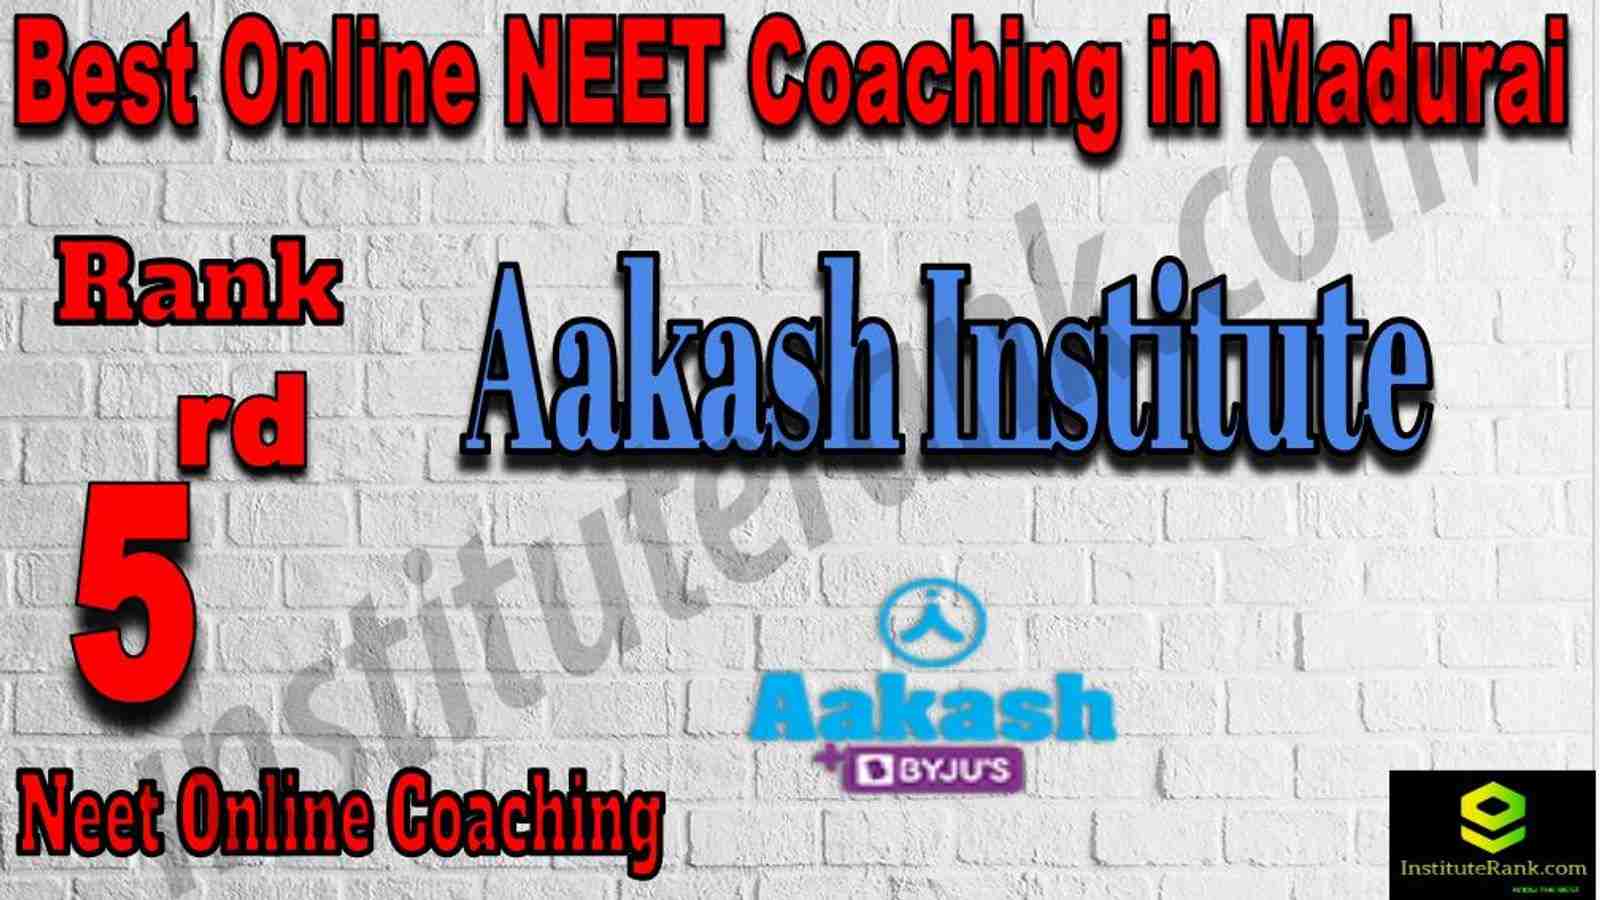 5th Best Online Neet Coaching in Madurai